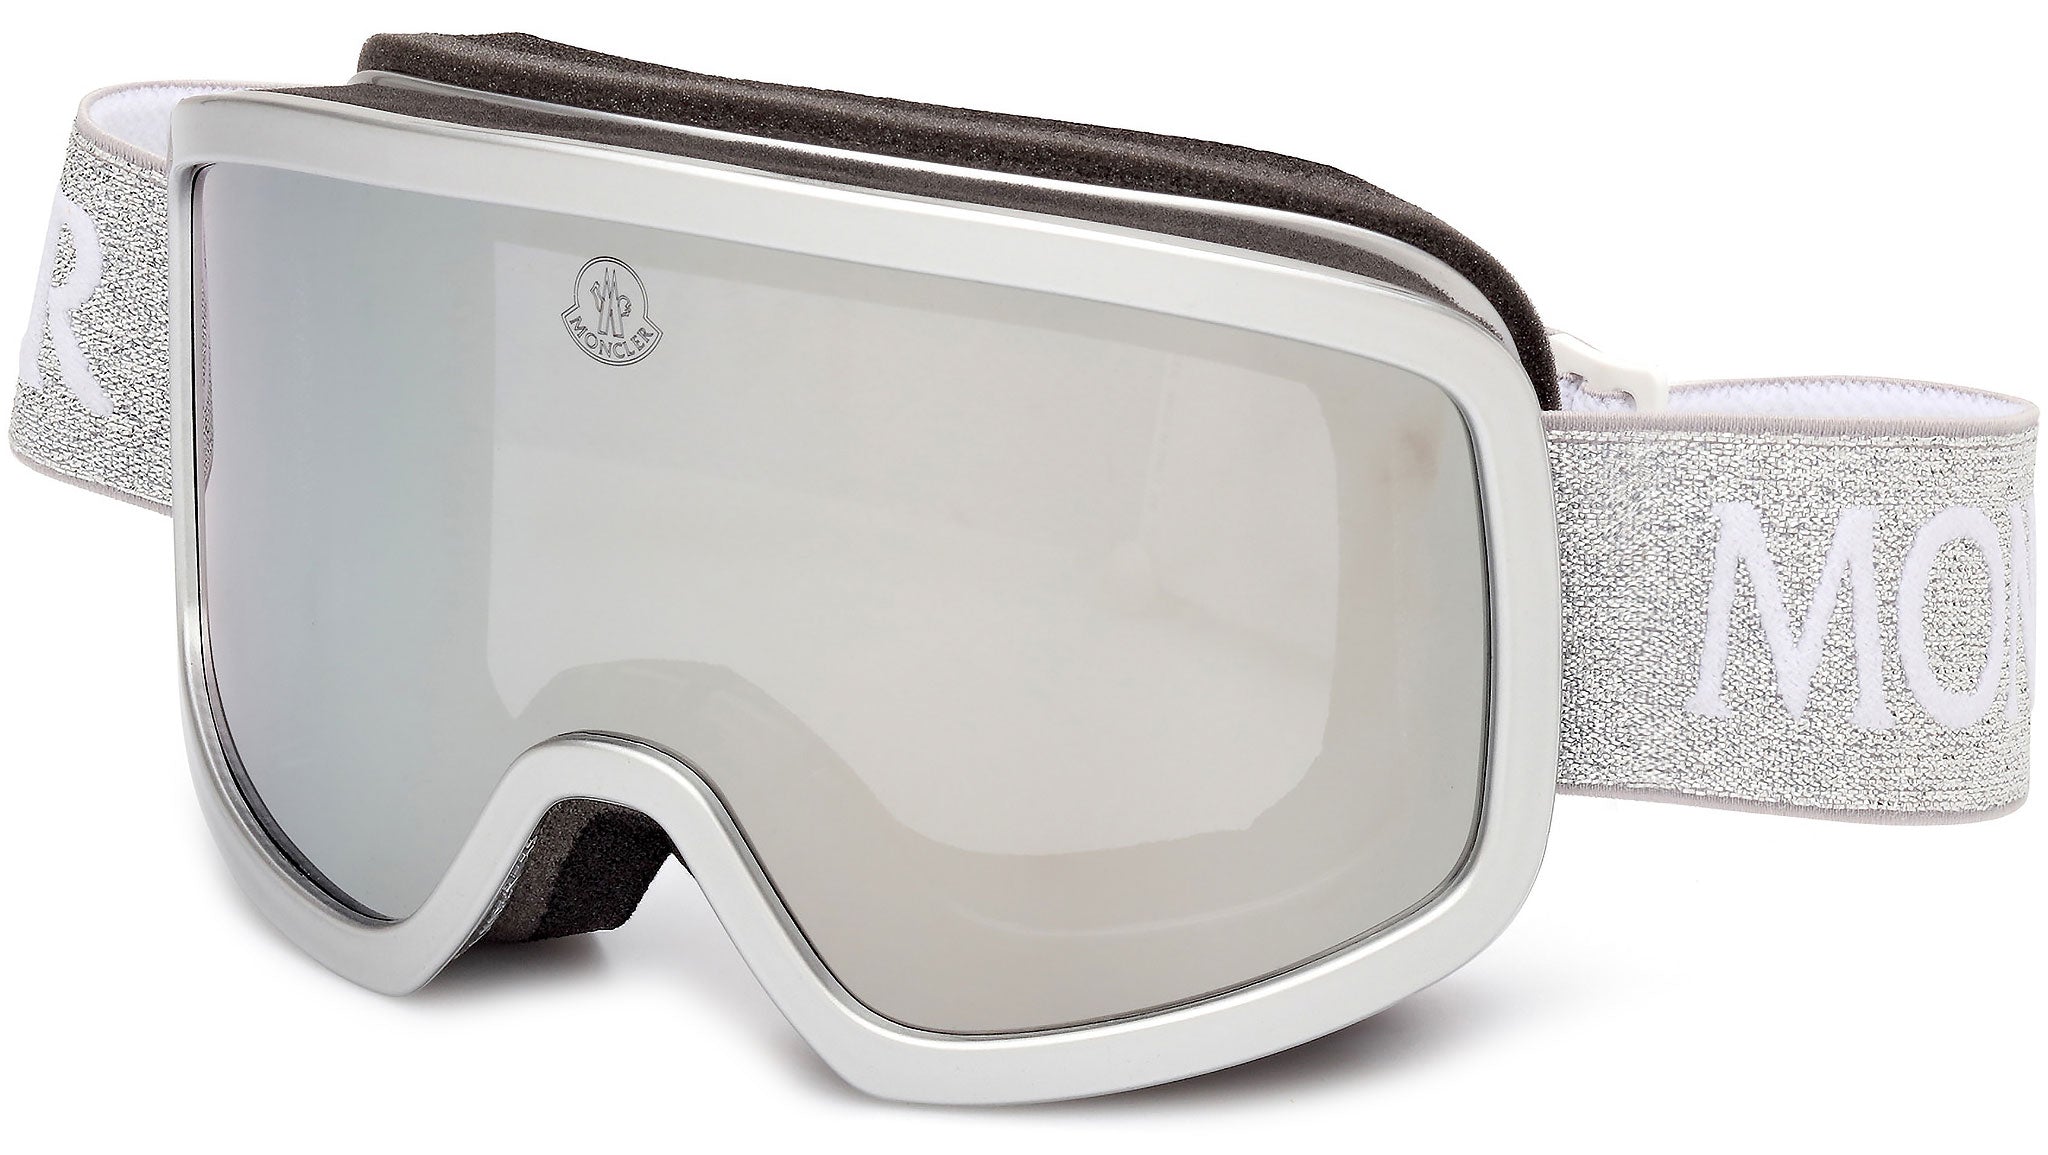 White Mist Lunar Snow Goggles - White Frame with Chrome Silver